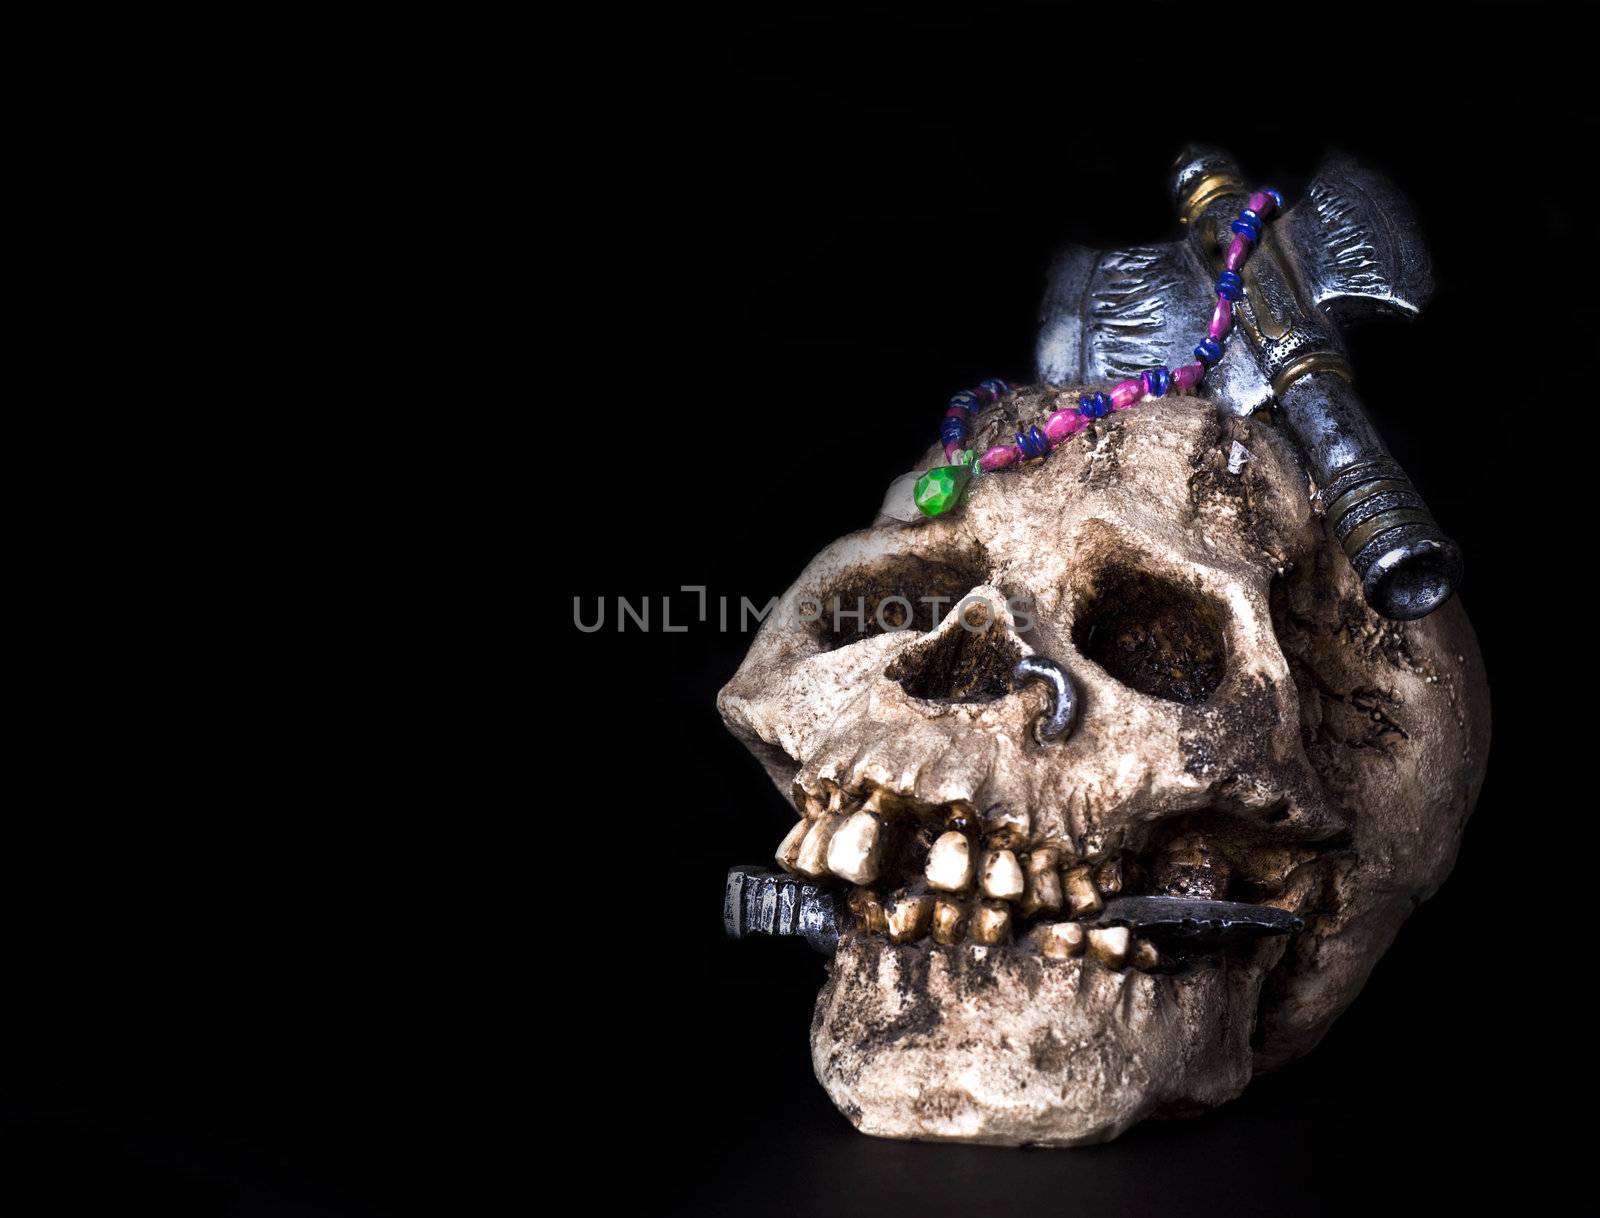 a pirate skull by gandolfocannatella